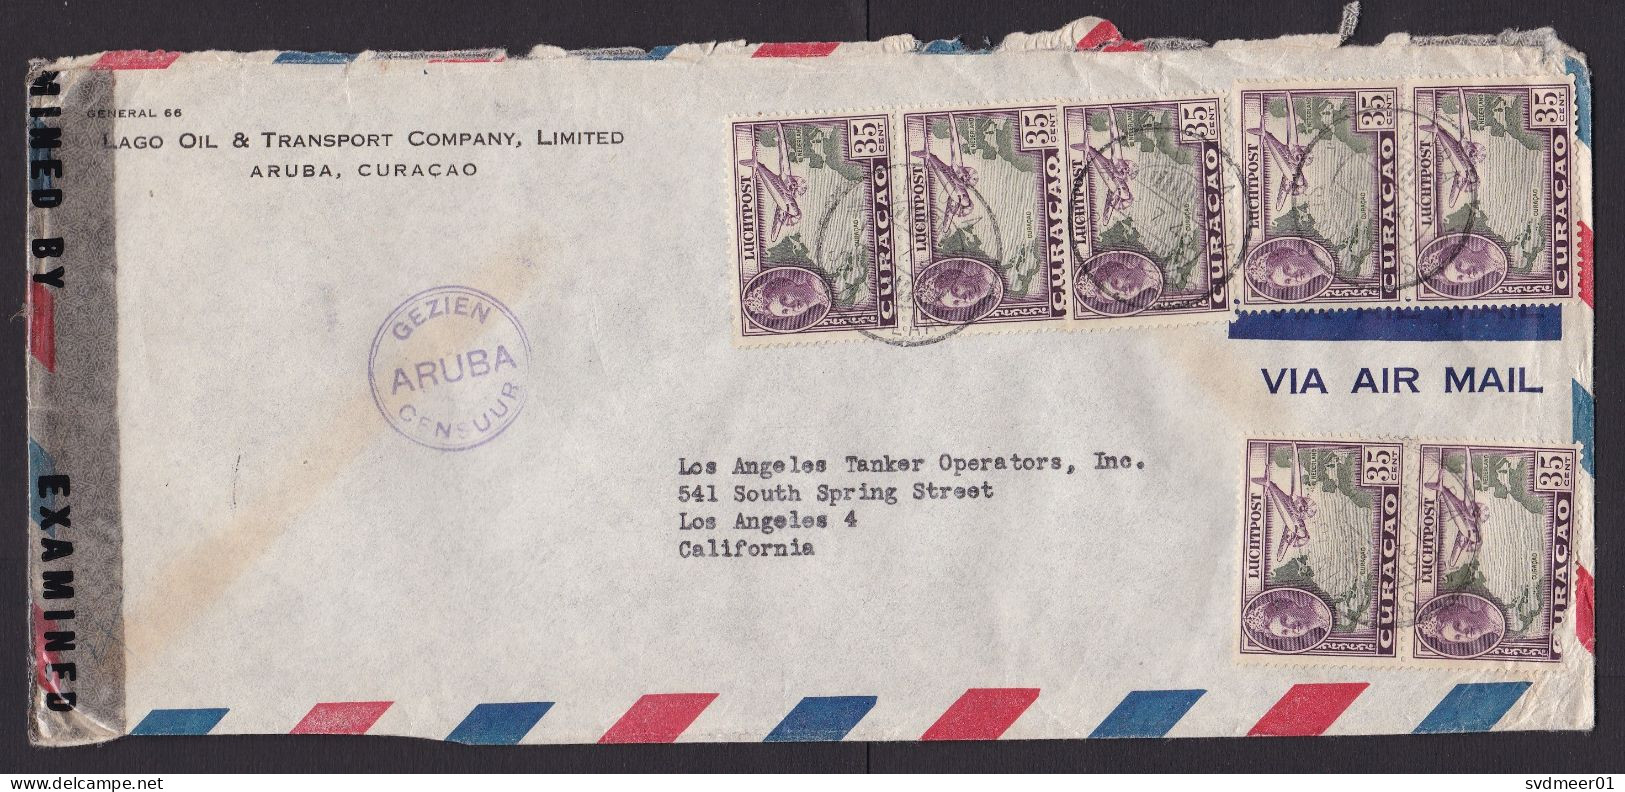 Curacao: Airmail Cover To USA, 1945, 7 Stamps, Map, 2x Censored: US Censor Tape, Aruba Cancel, War, Oil (damaged) - Curaçao, Nederlandse Antillen, Aruba